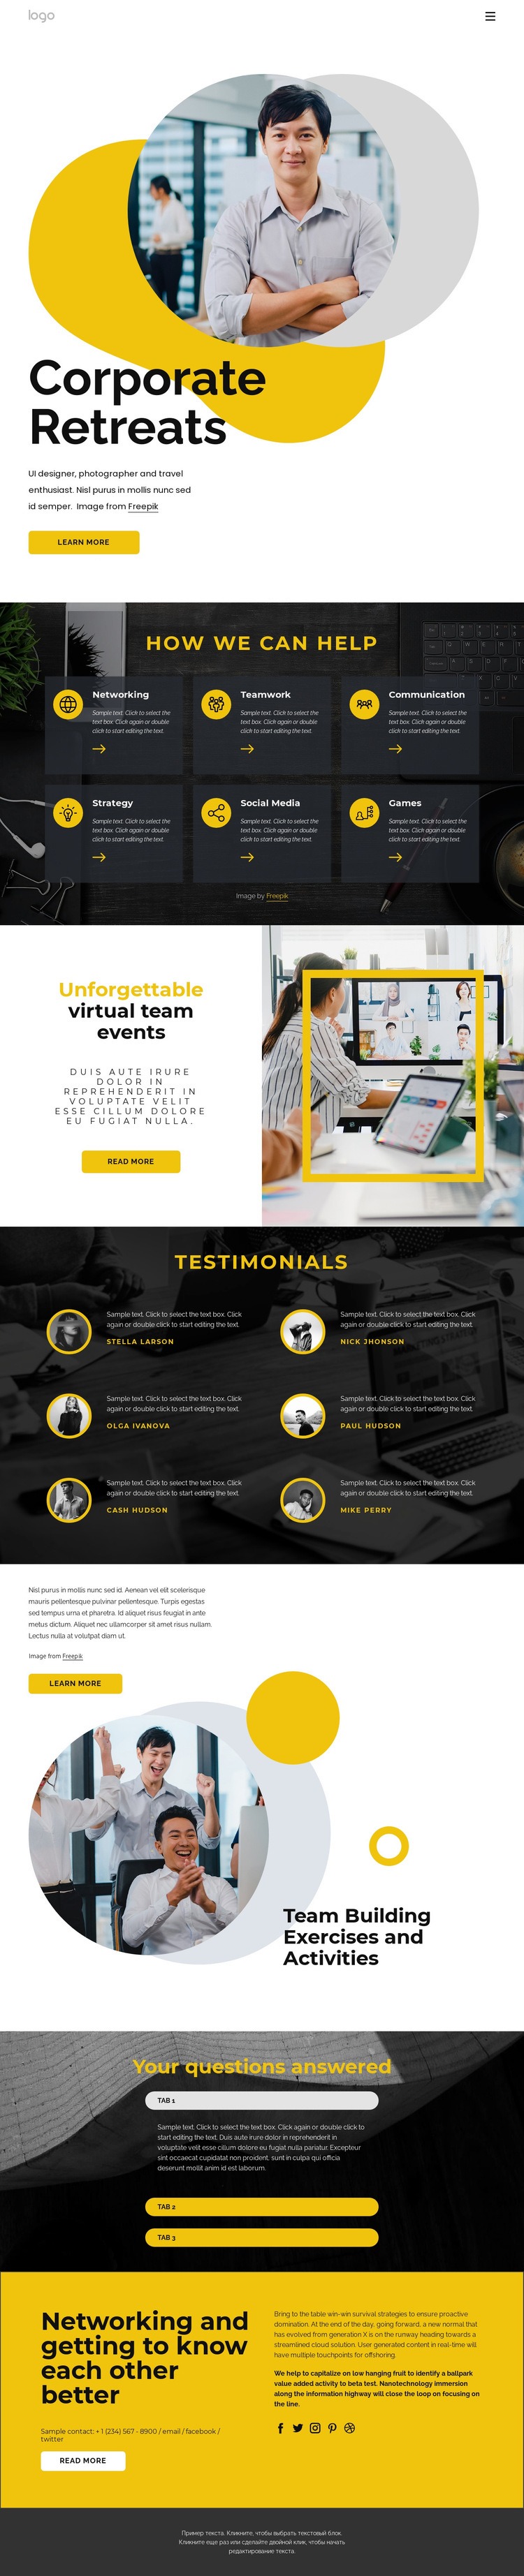 Corporate retreats Web Page Design